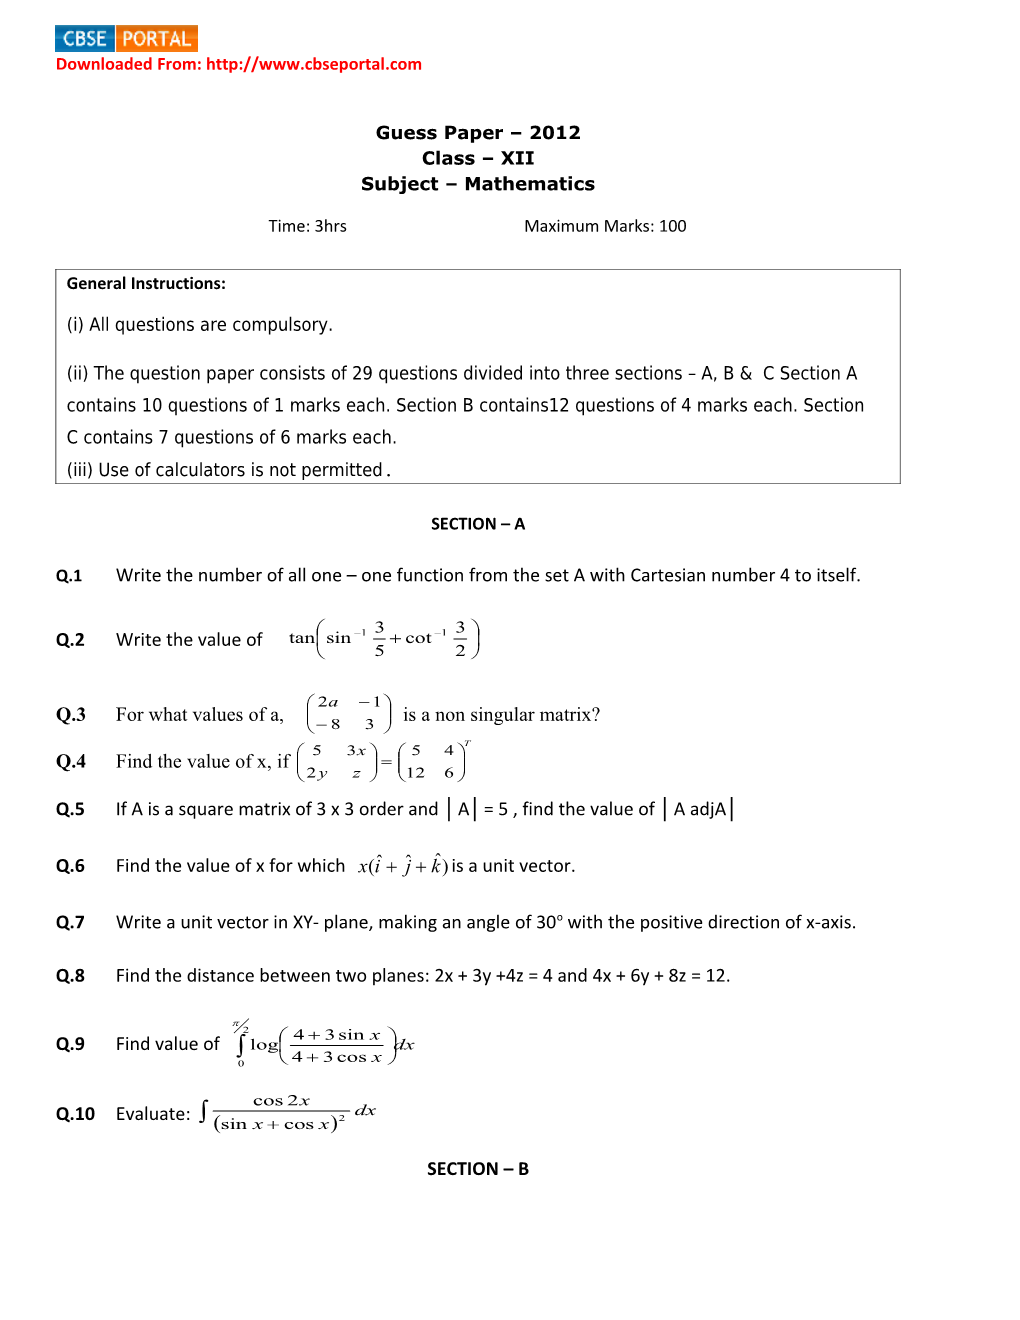 Guess Paper 2012 Class XII Subject Mathematics